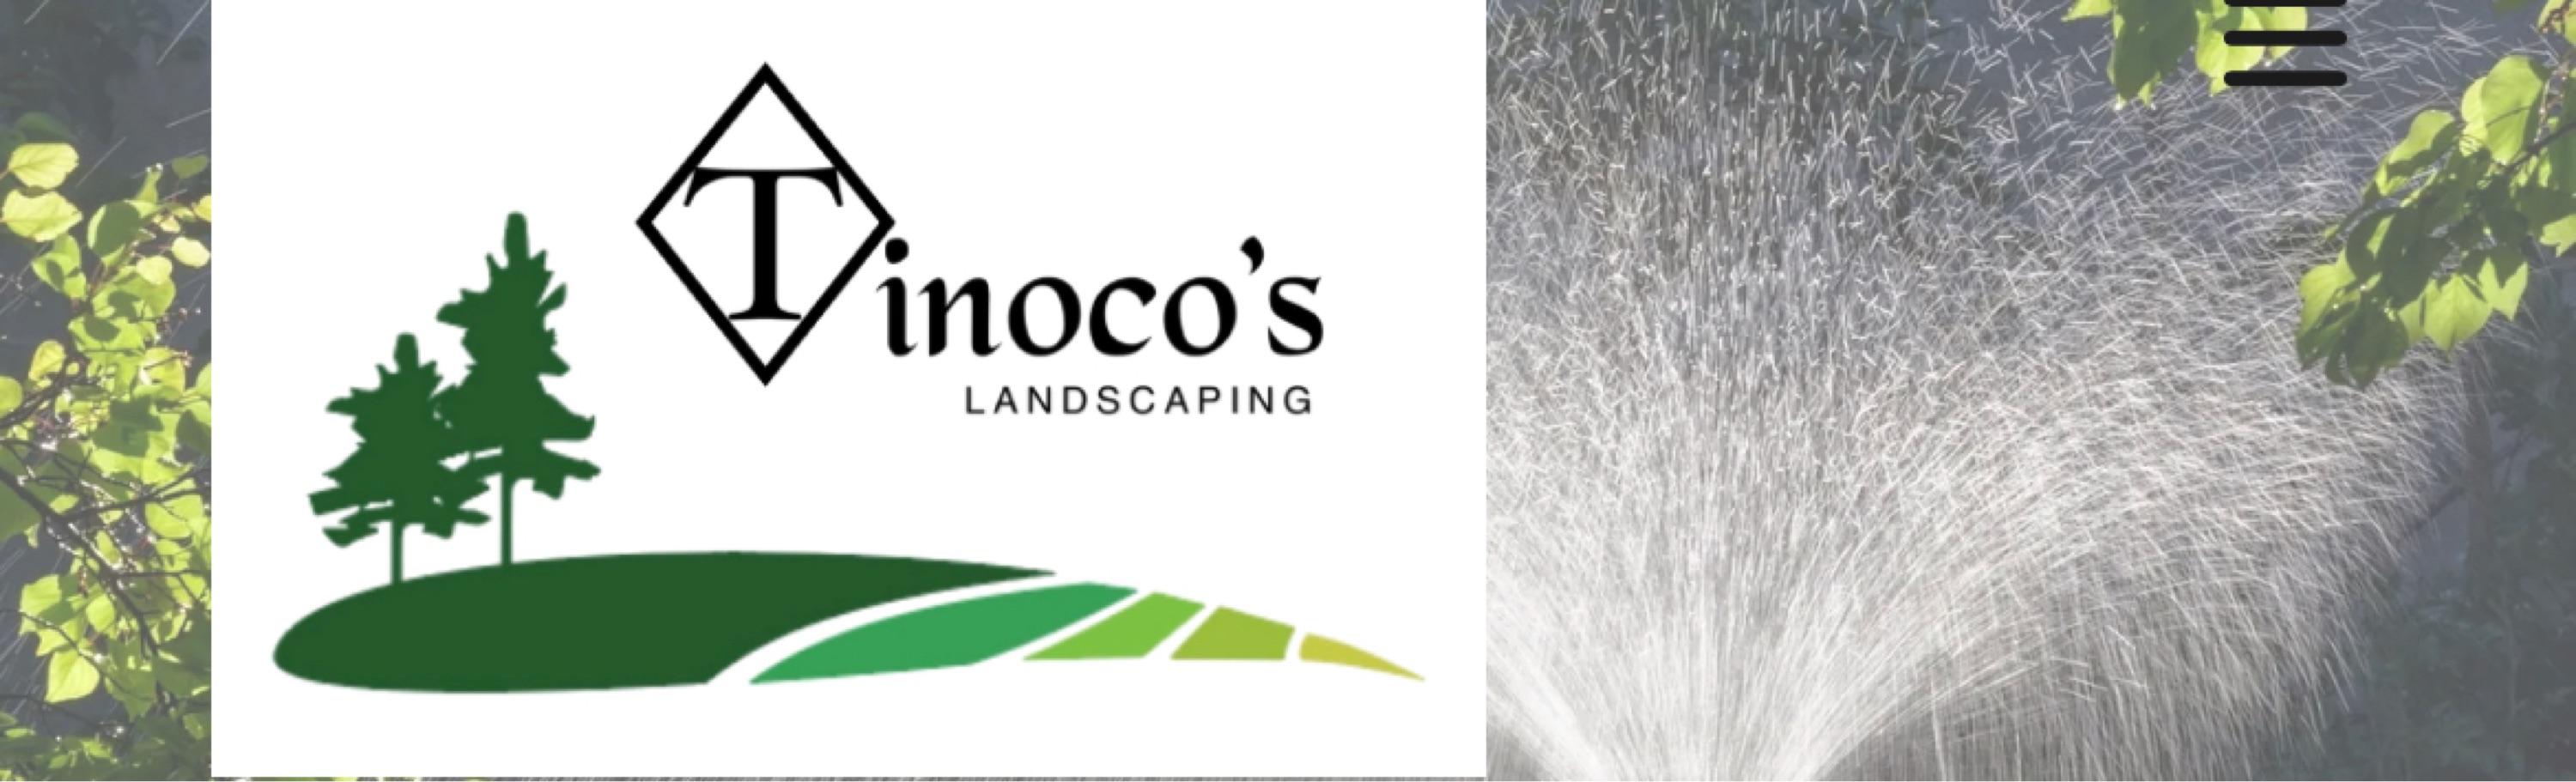 Tinoco's Landscaping, Inc. Logo